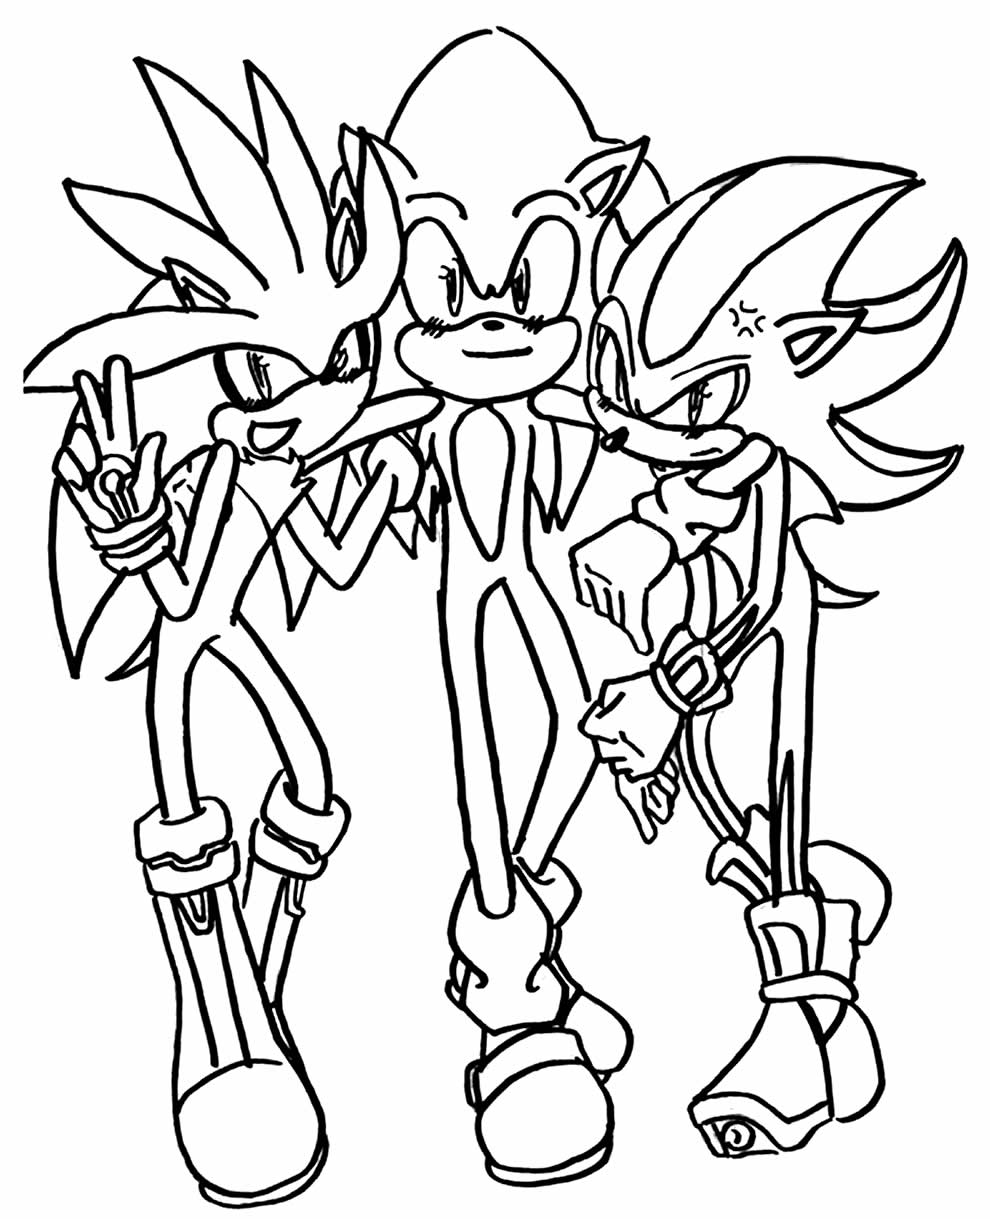 Desenho Sonic para colorir